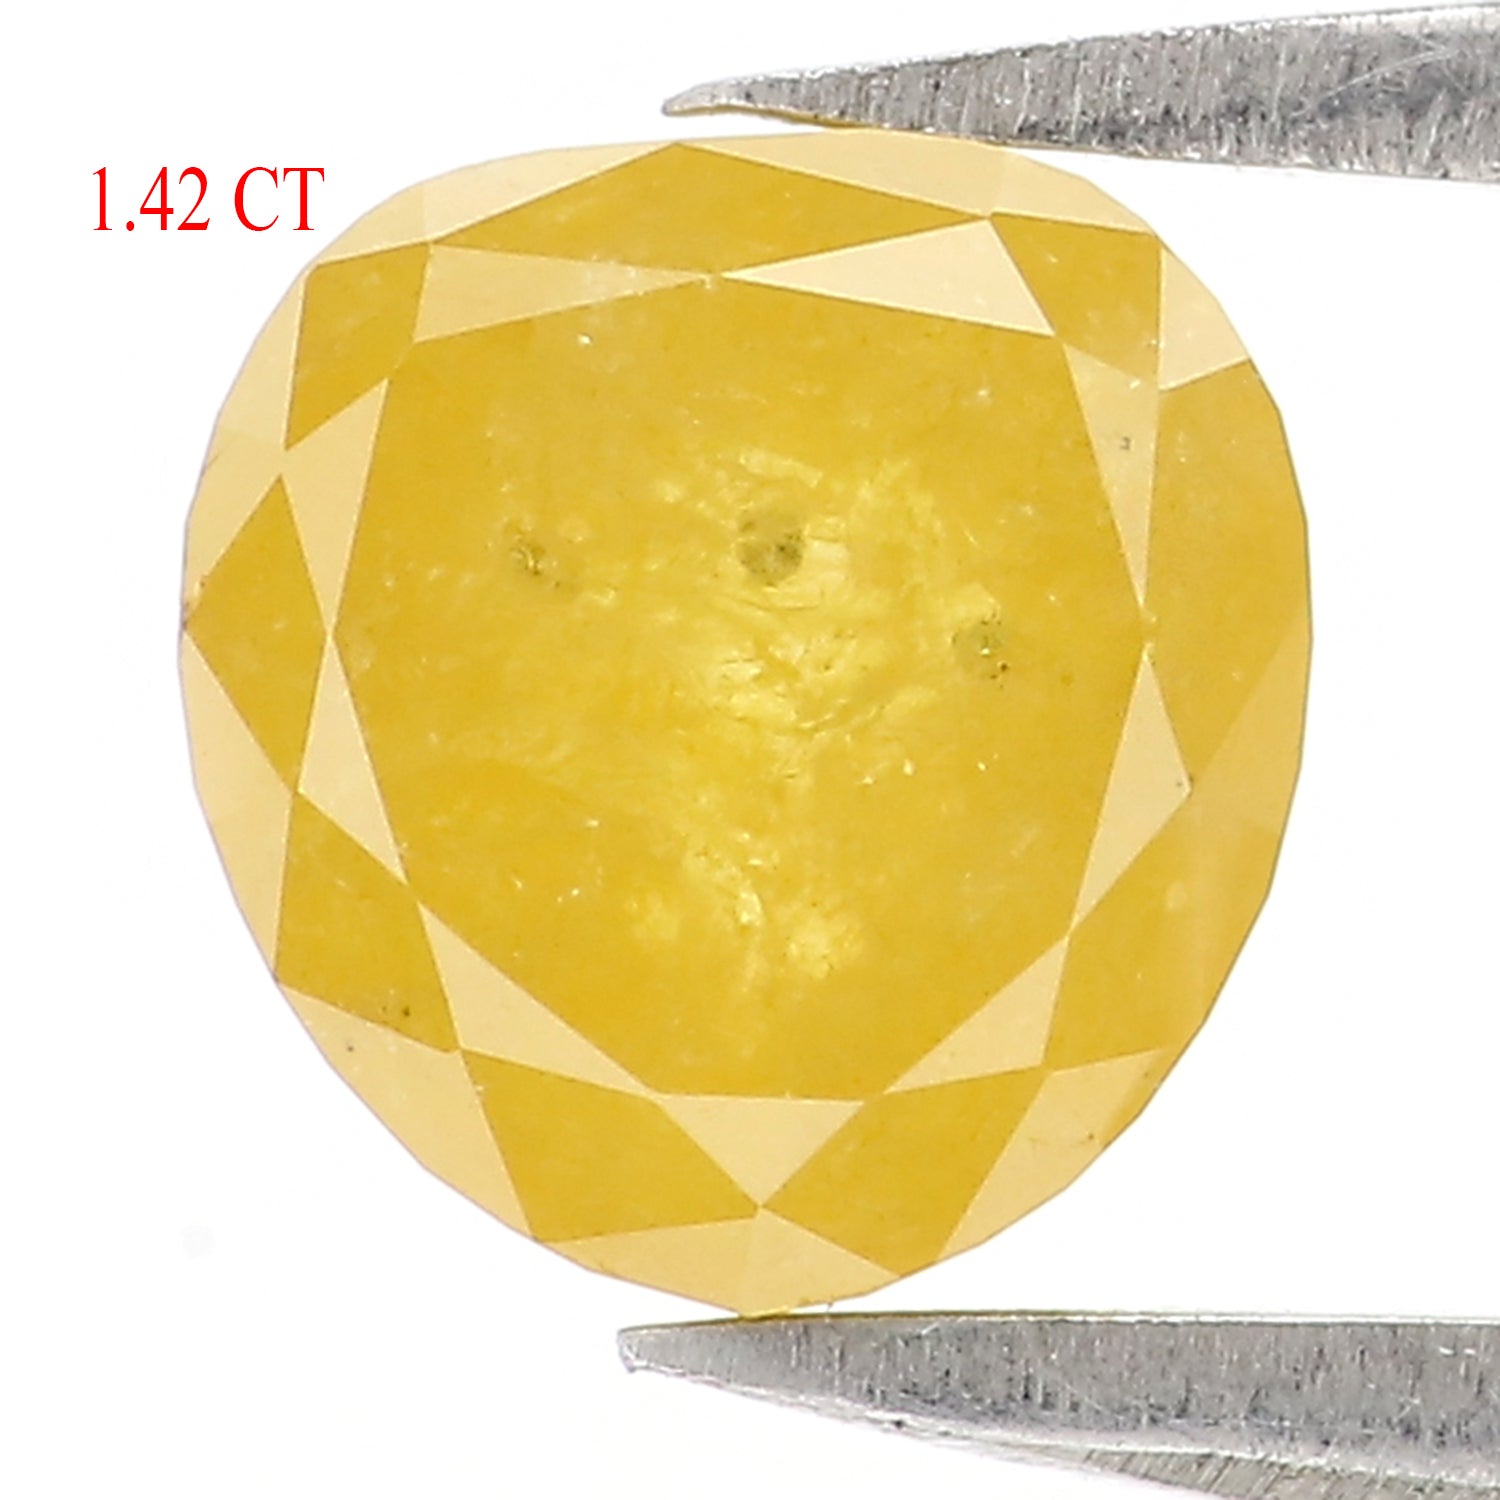 Natural Loose Heart Cut Diamond, Heart Yellow Color Diamond, Natural Loose Diamond, Heart Rose Cut Diamond 1.42 CT Heart Shape Diamond L2865